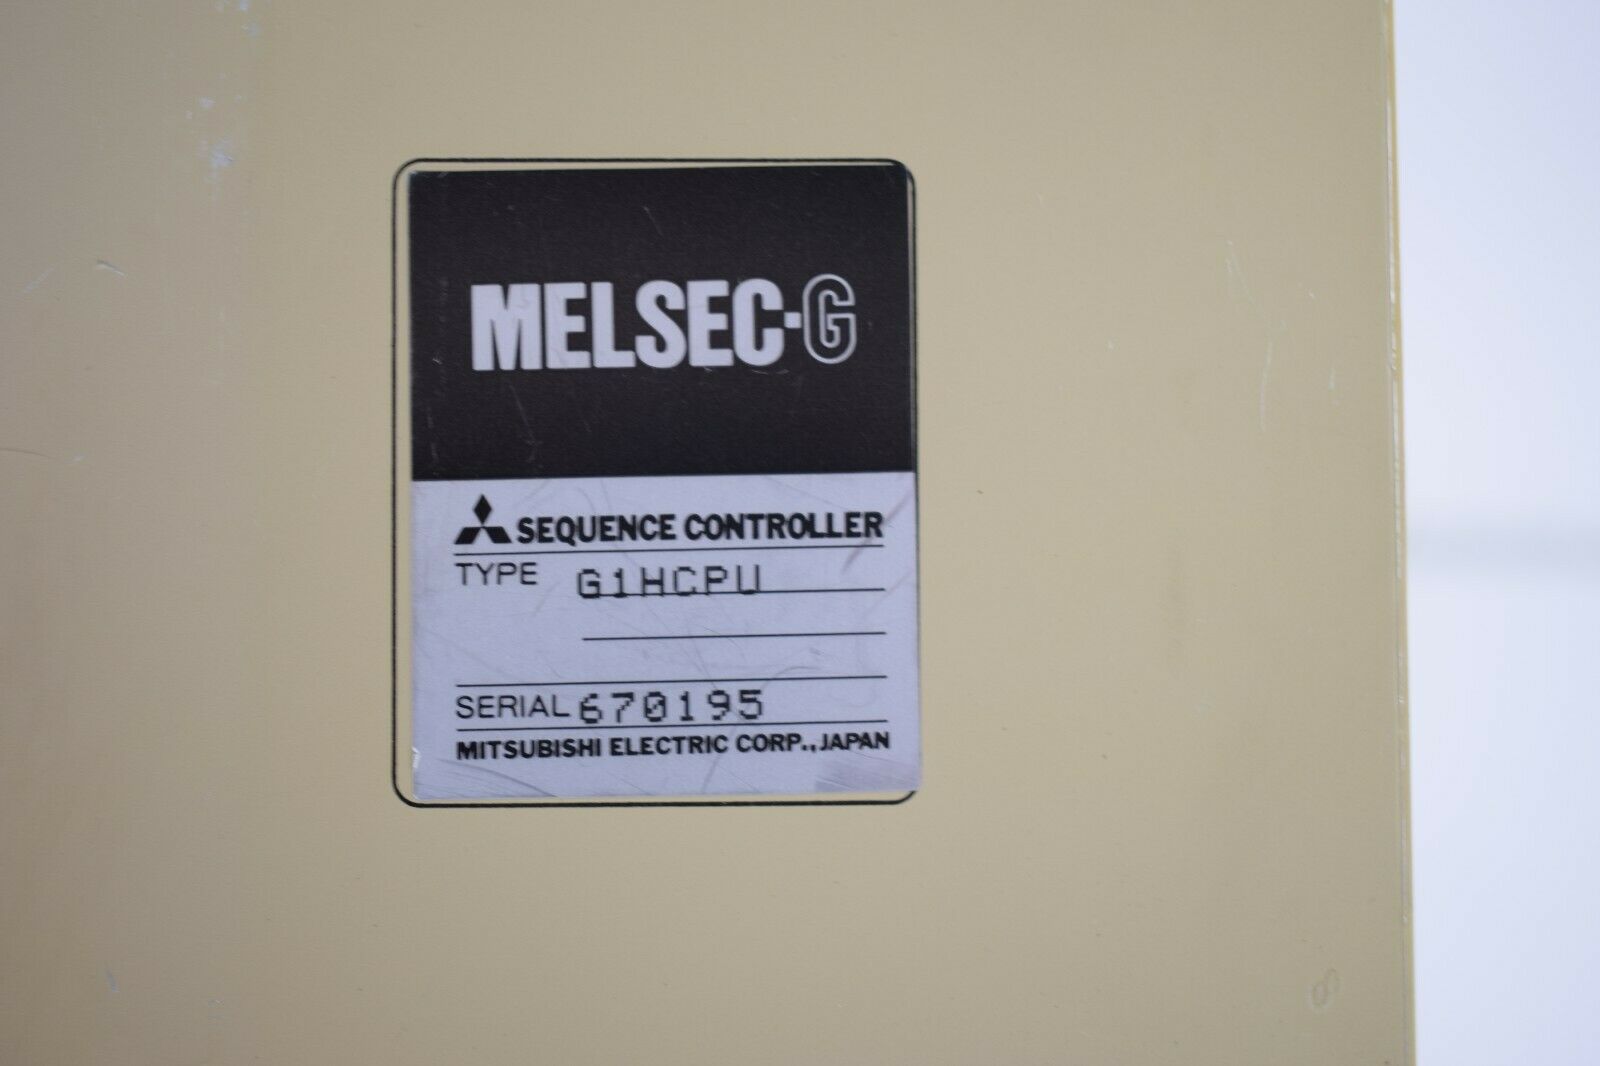 Mitsubishi Electric Melsec-G Sequence Controller G1HCPU inkl. Schlüssel 